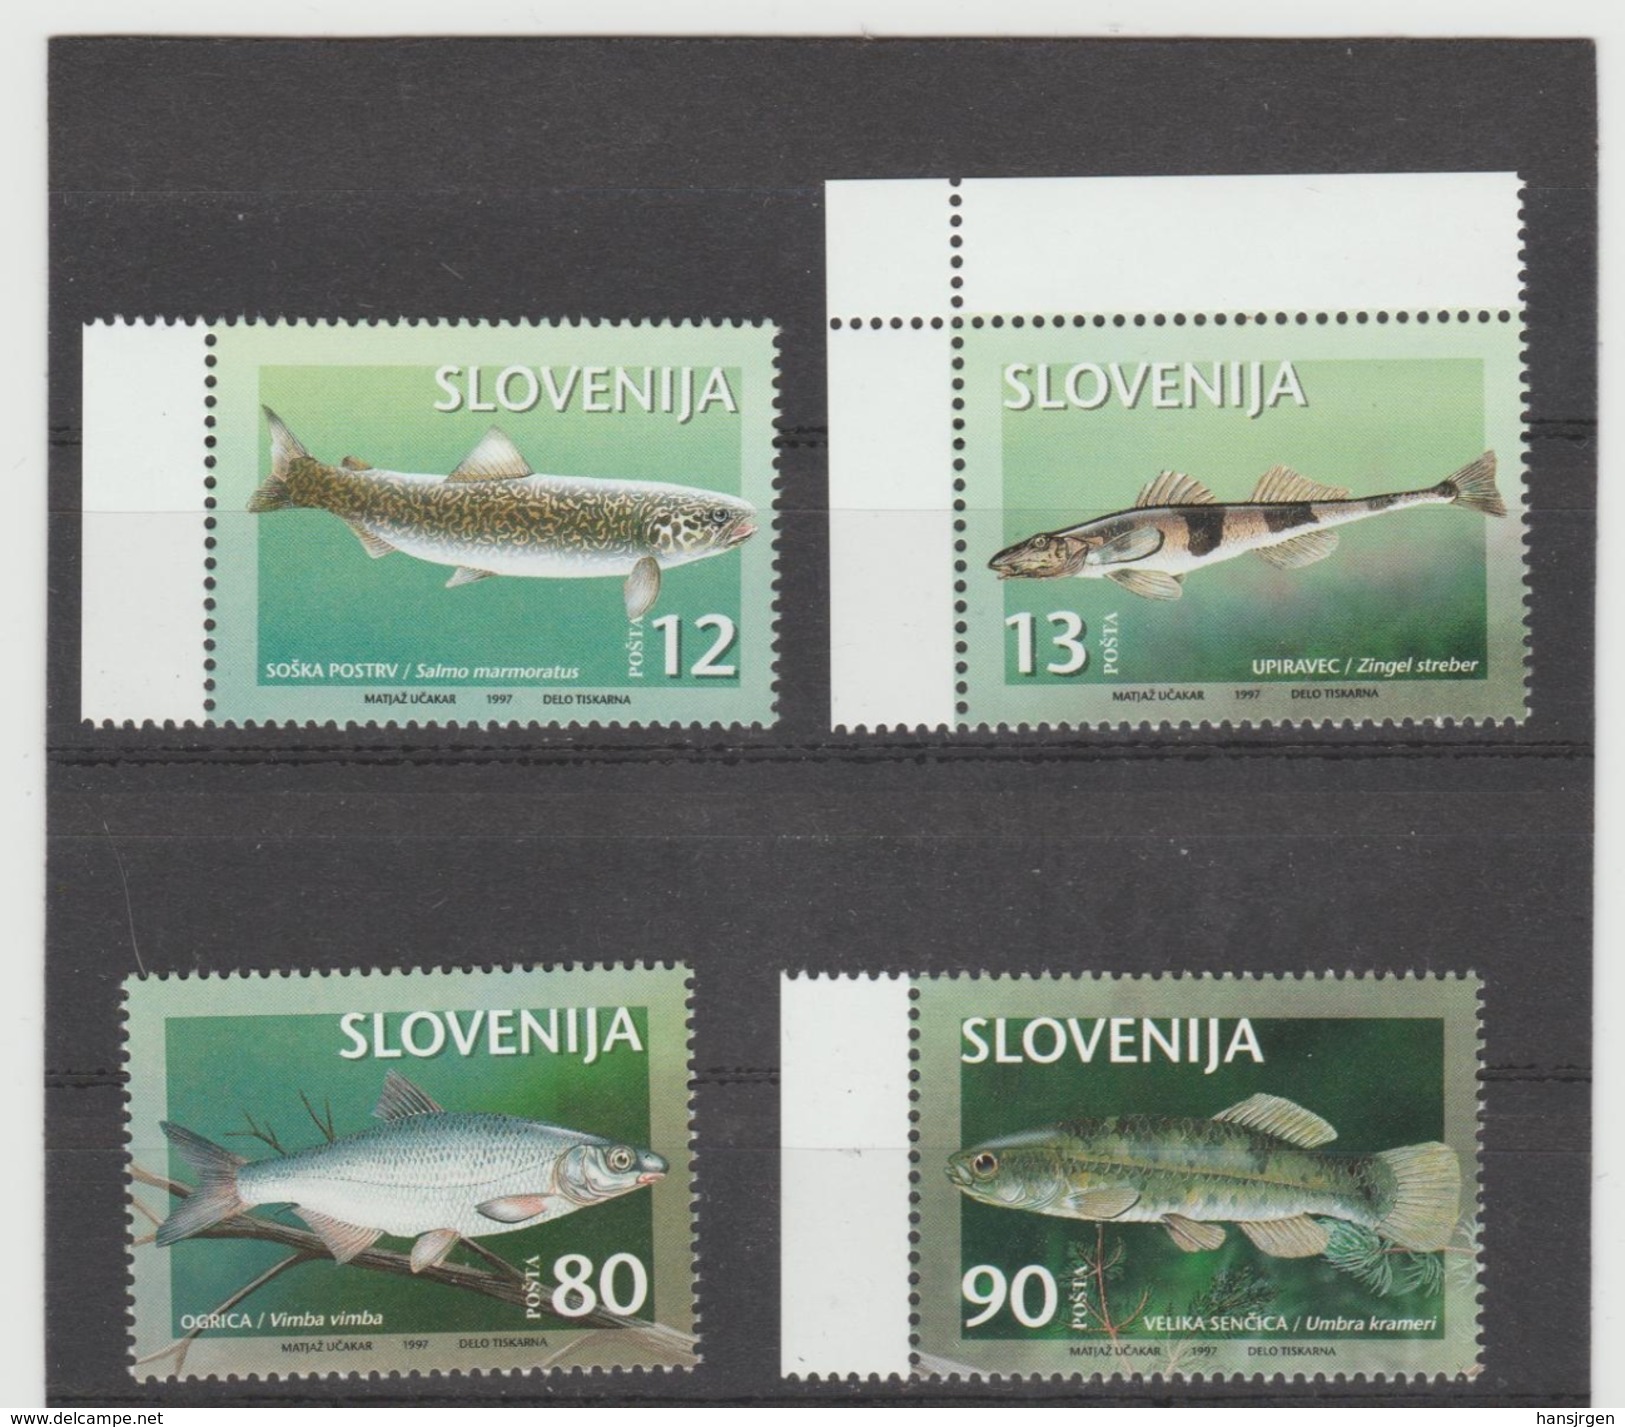 NEU741  SLOWENIEN / SLOVENIJA  1997 MICHL  178/81  Postfrisch SIHE ABBILDUNG - Slovenië